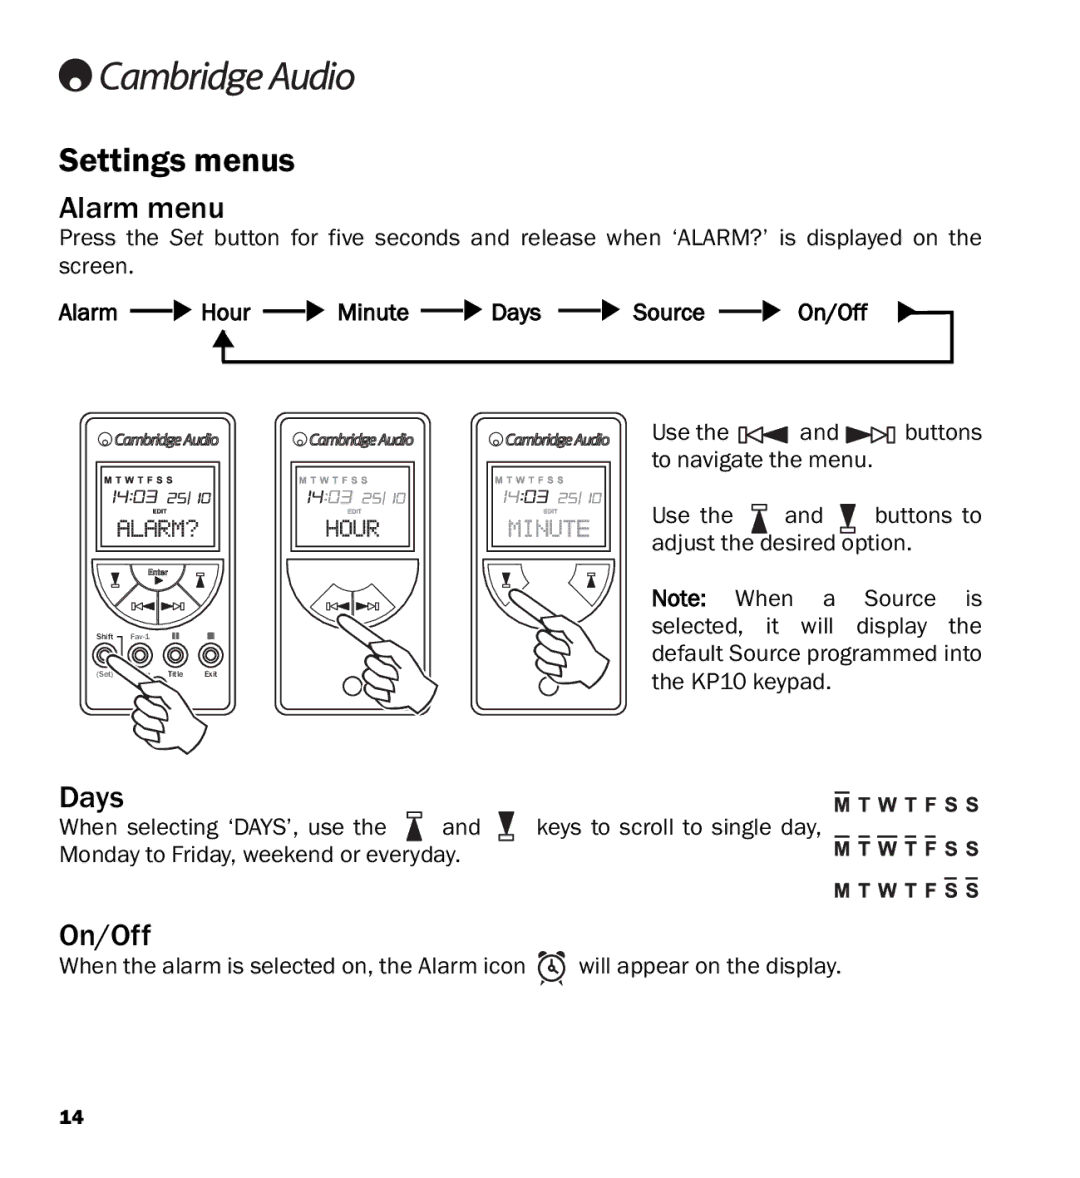 Cambridge Audio LK10 manual Alarm menu, Alarm Hour Minute Days Source On/Off 